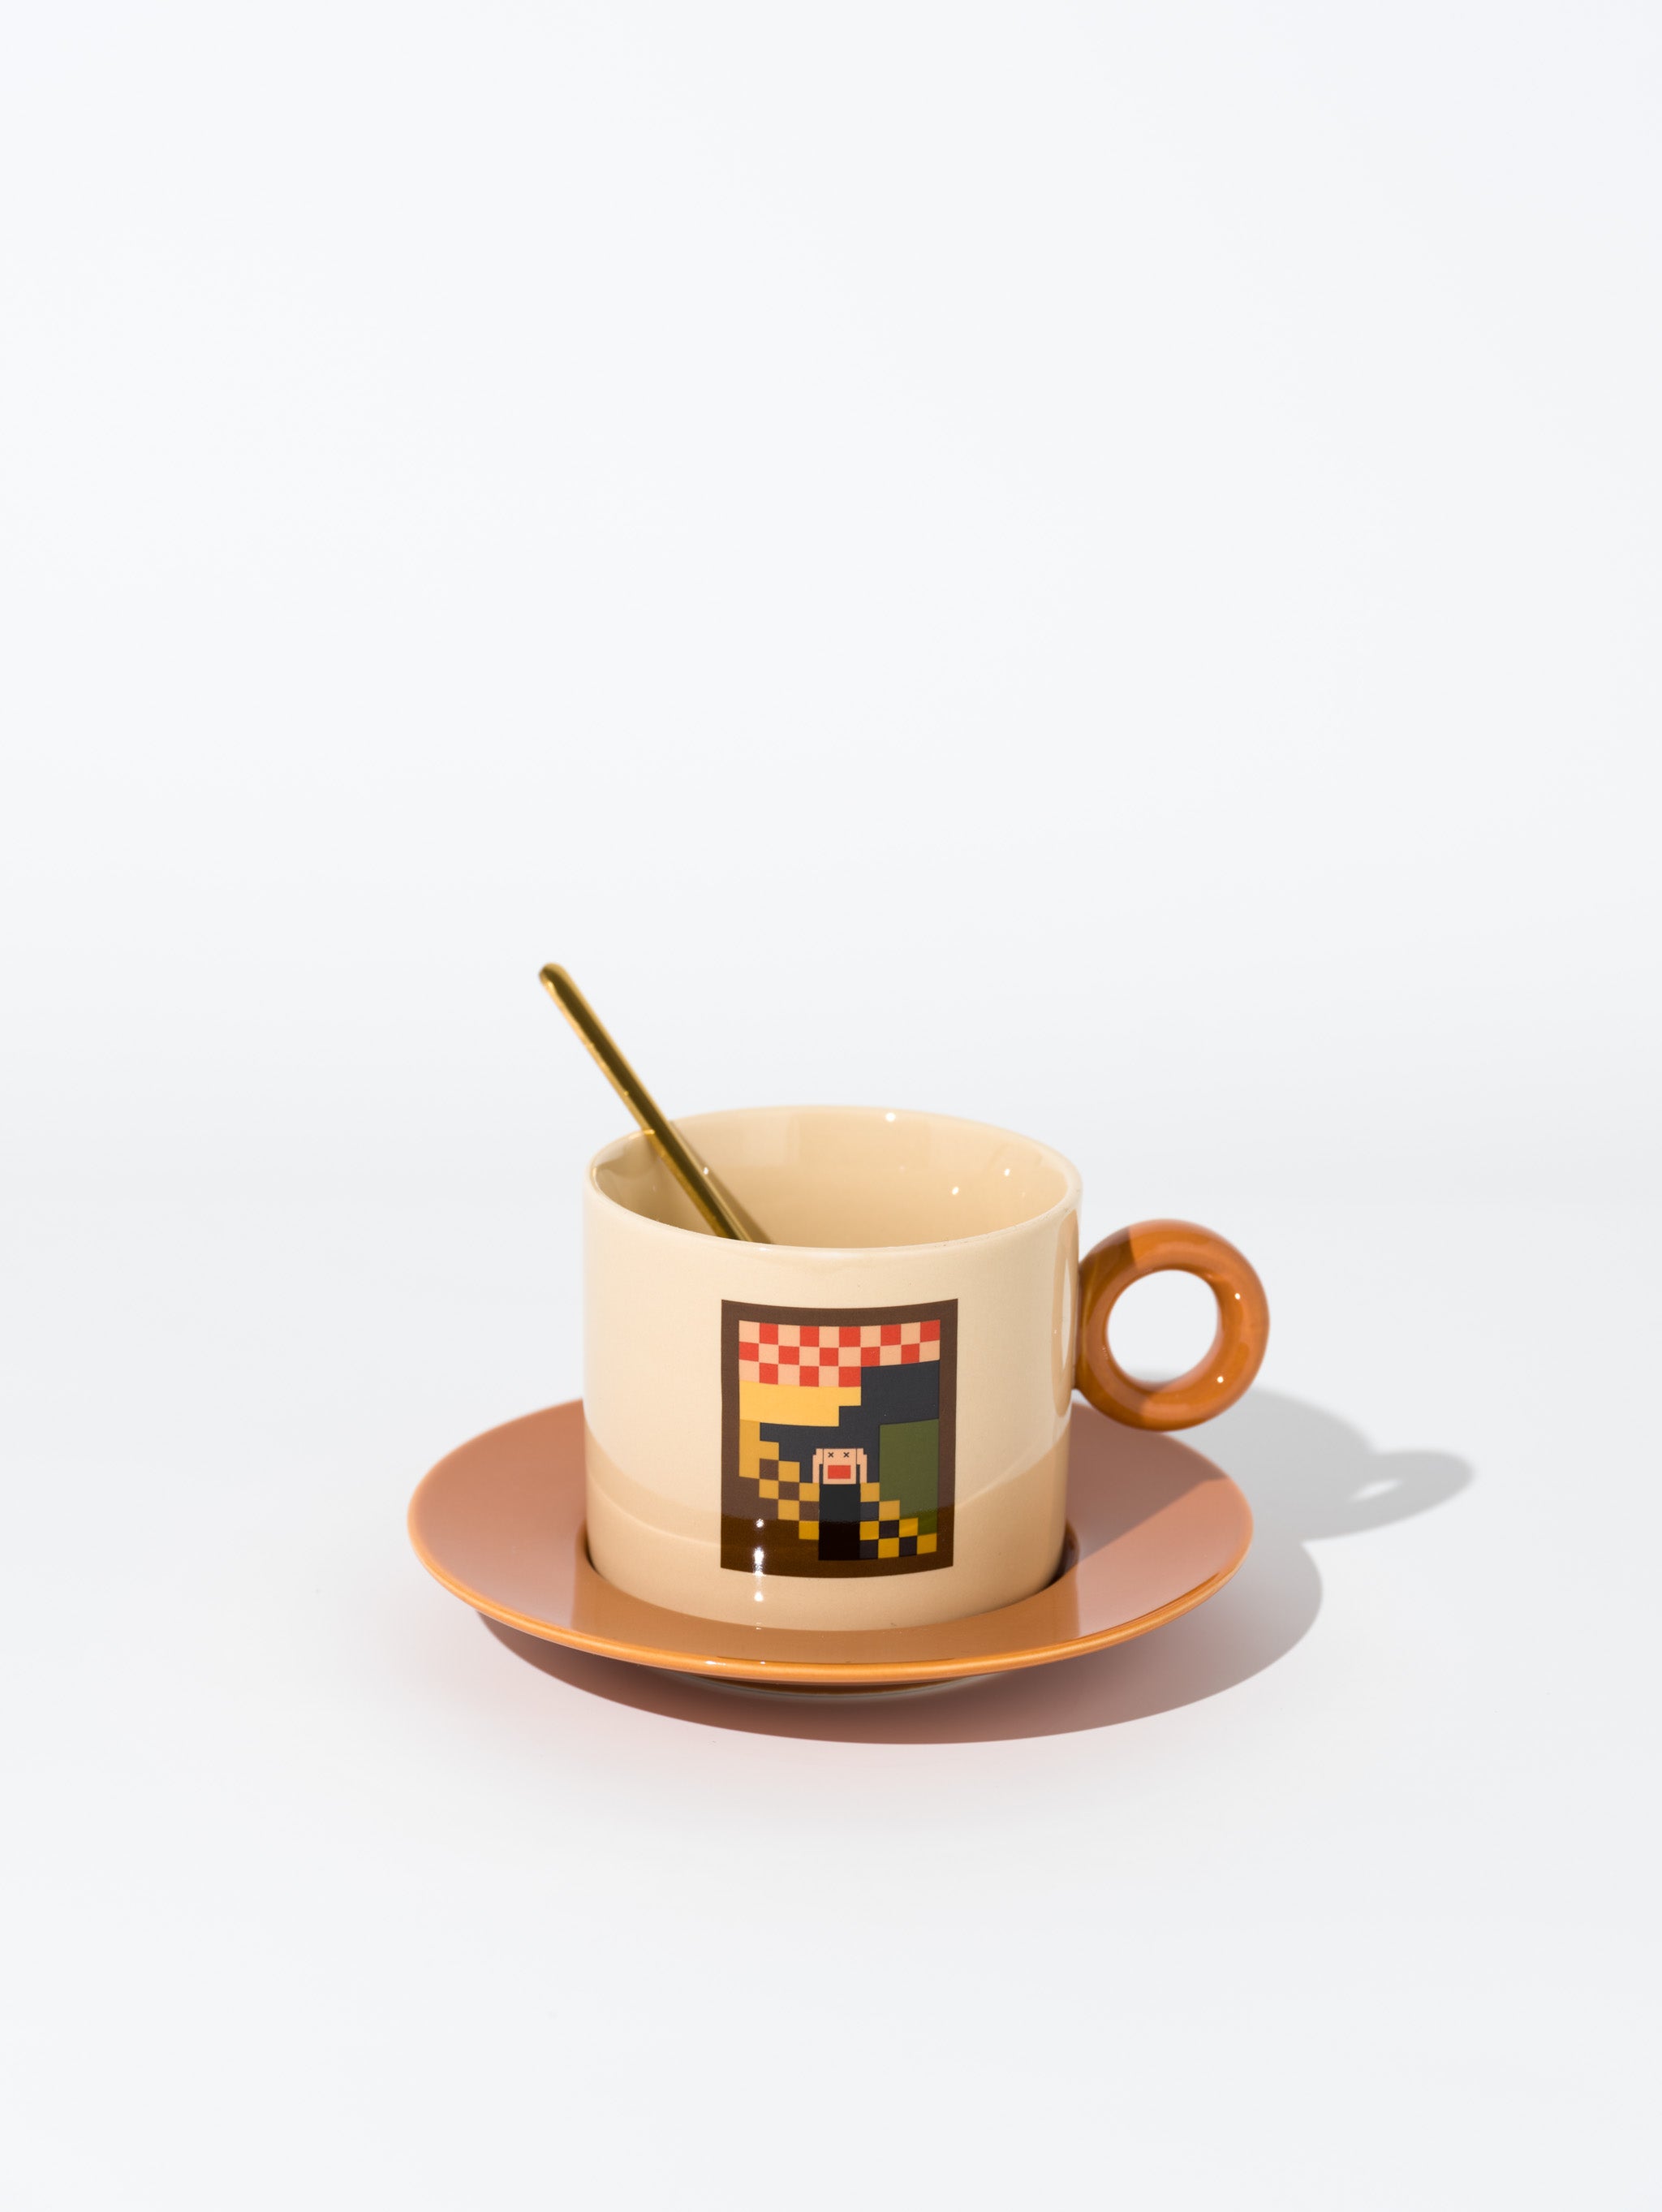 The Scream Mosaic Coffee Cup